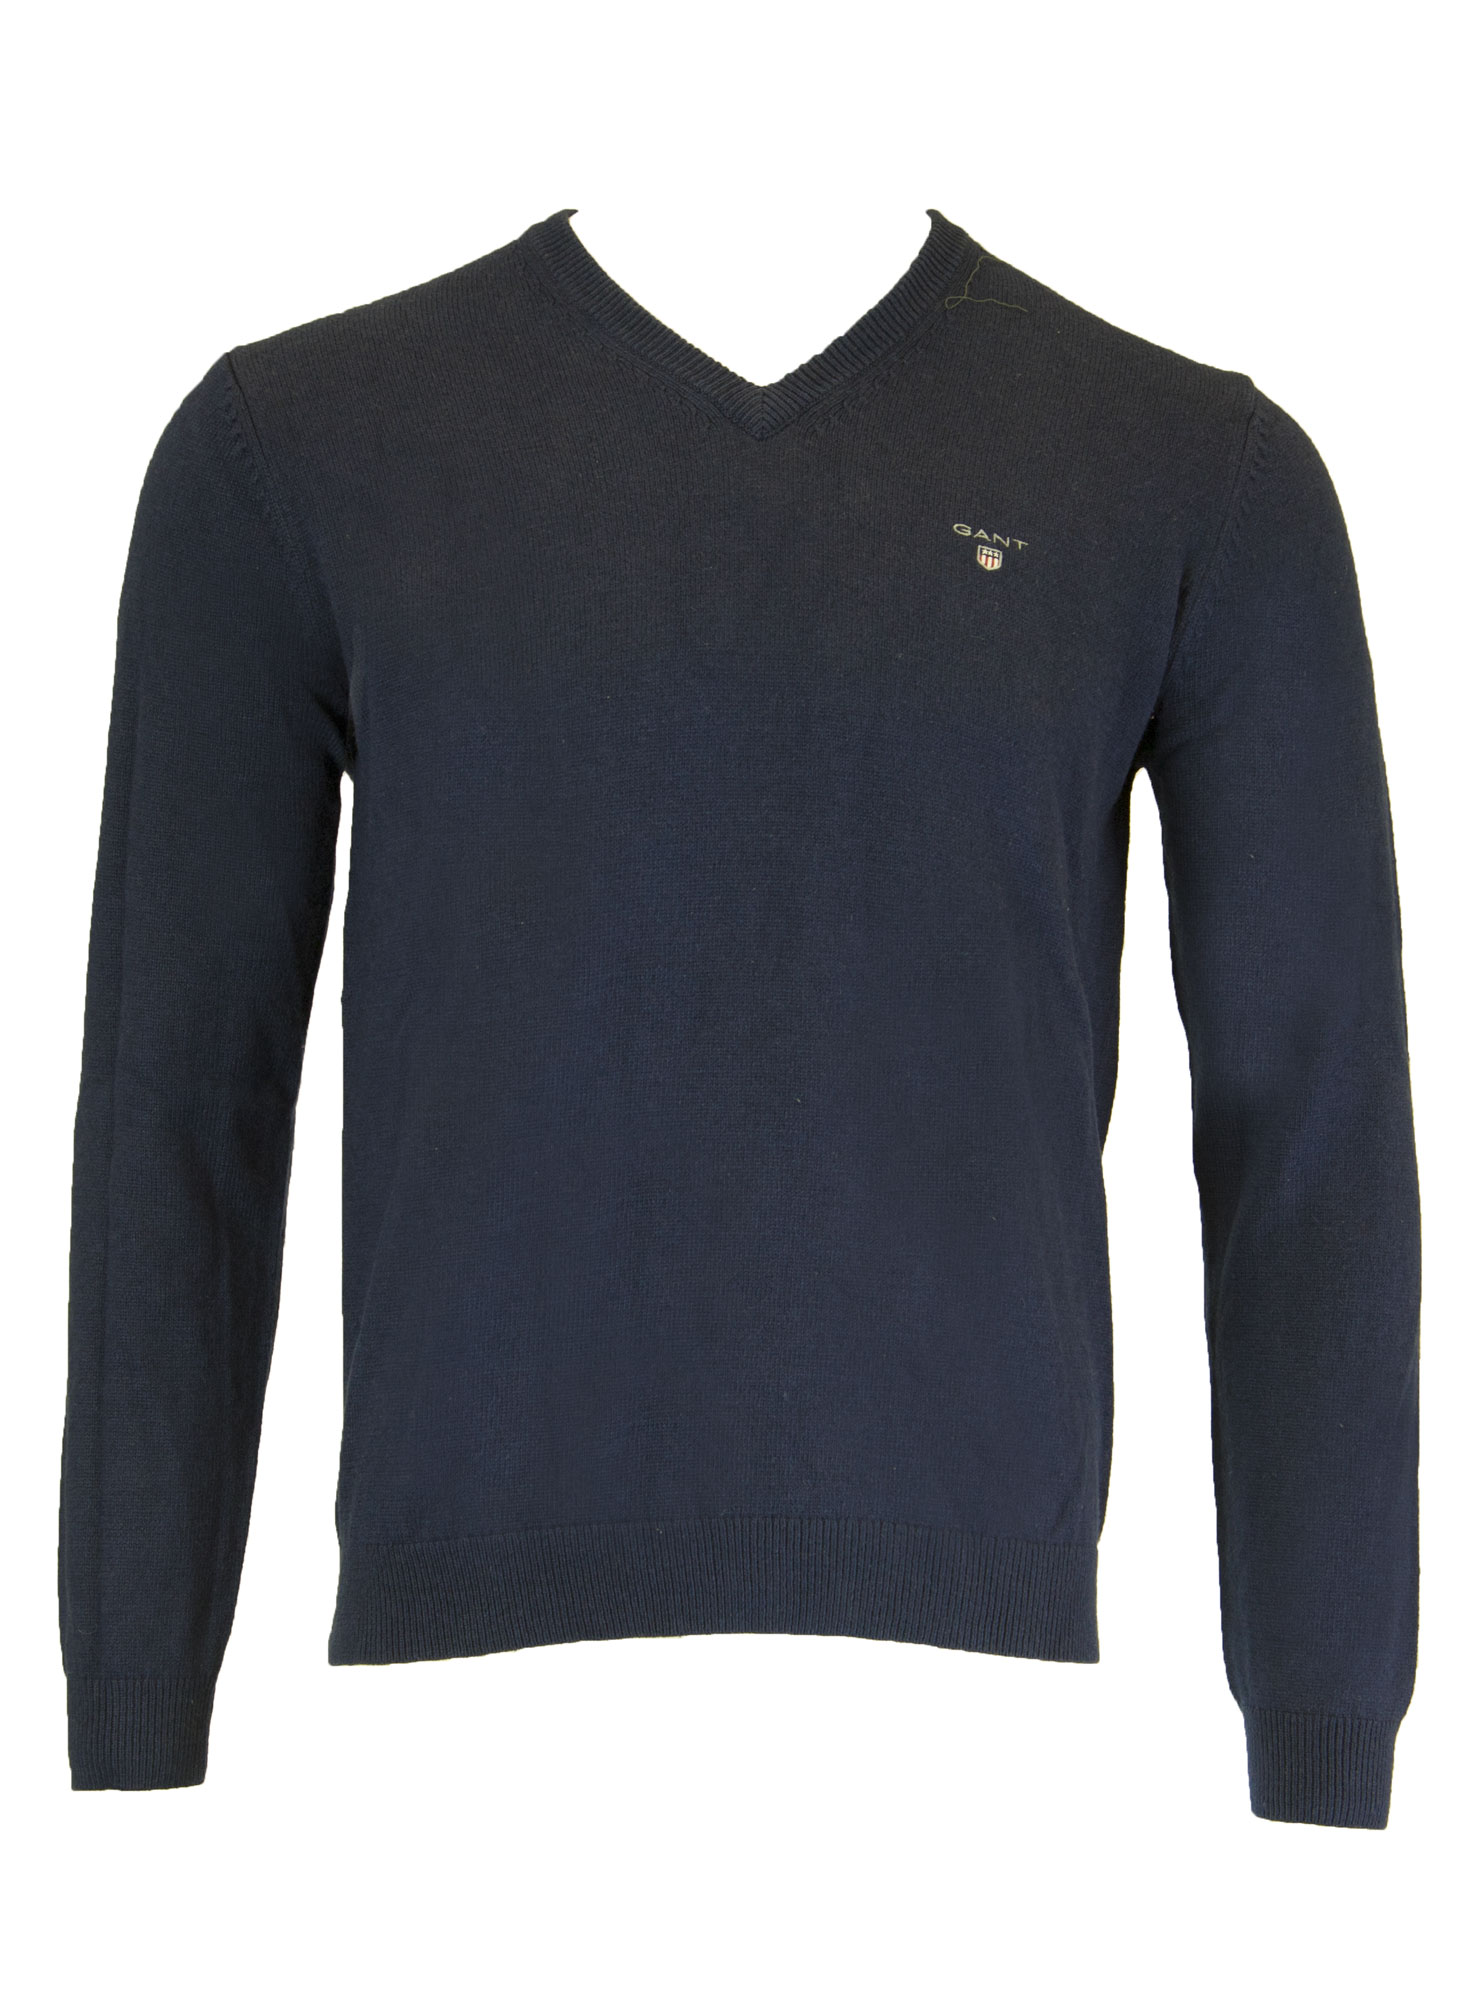 GANT Capri Blue Men's Cotton Pique Crew Sweater 80021 Size M $145 NWT 